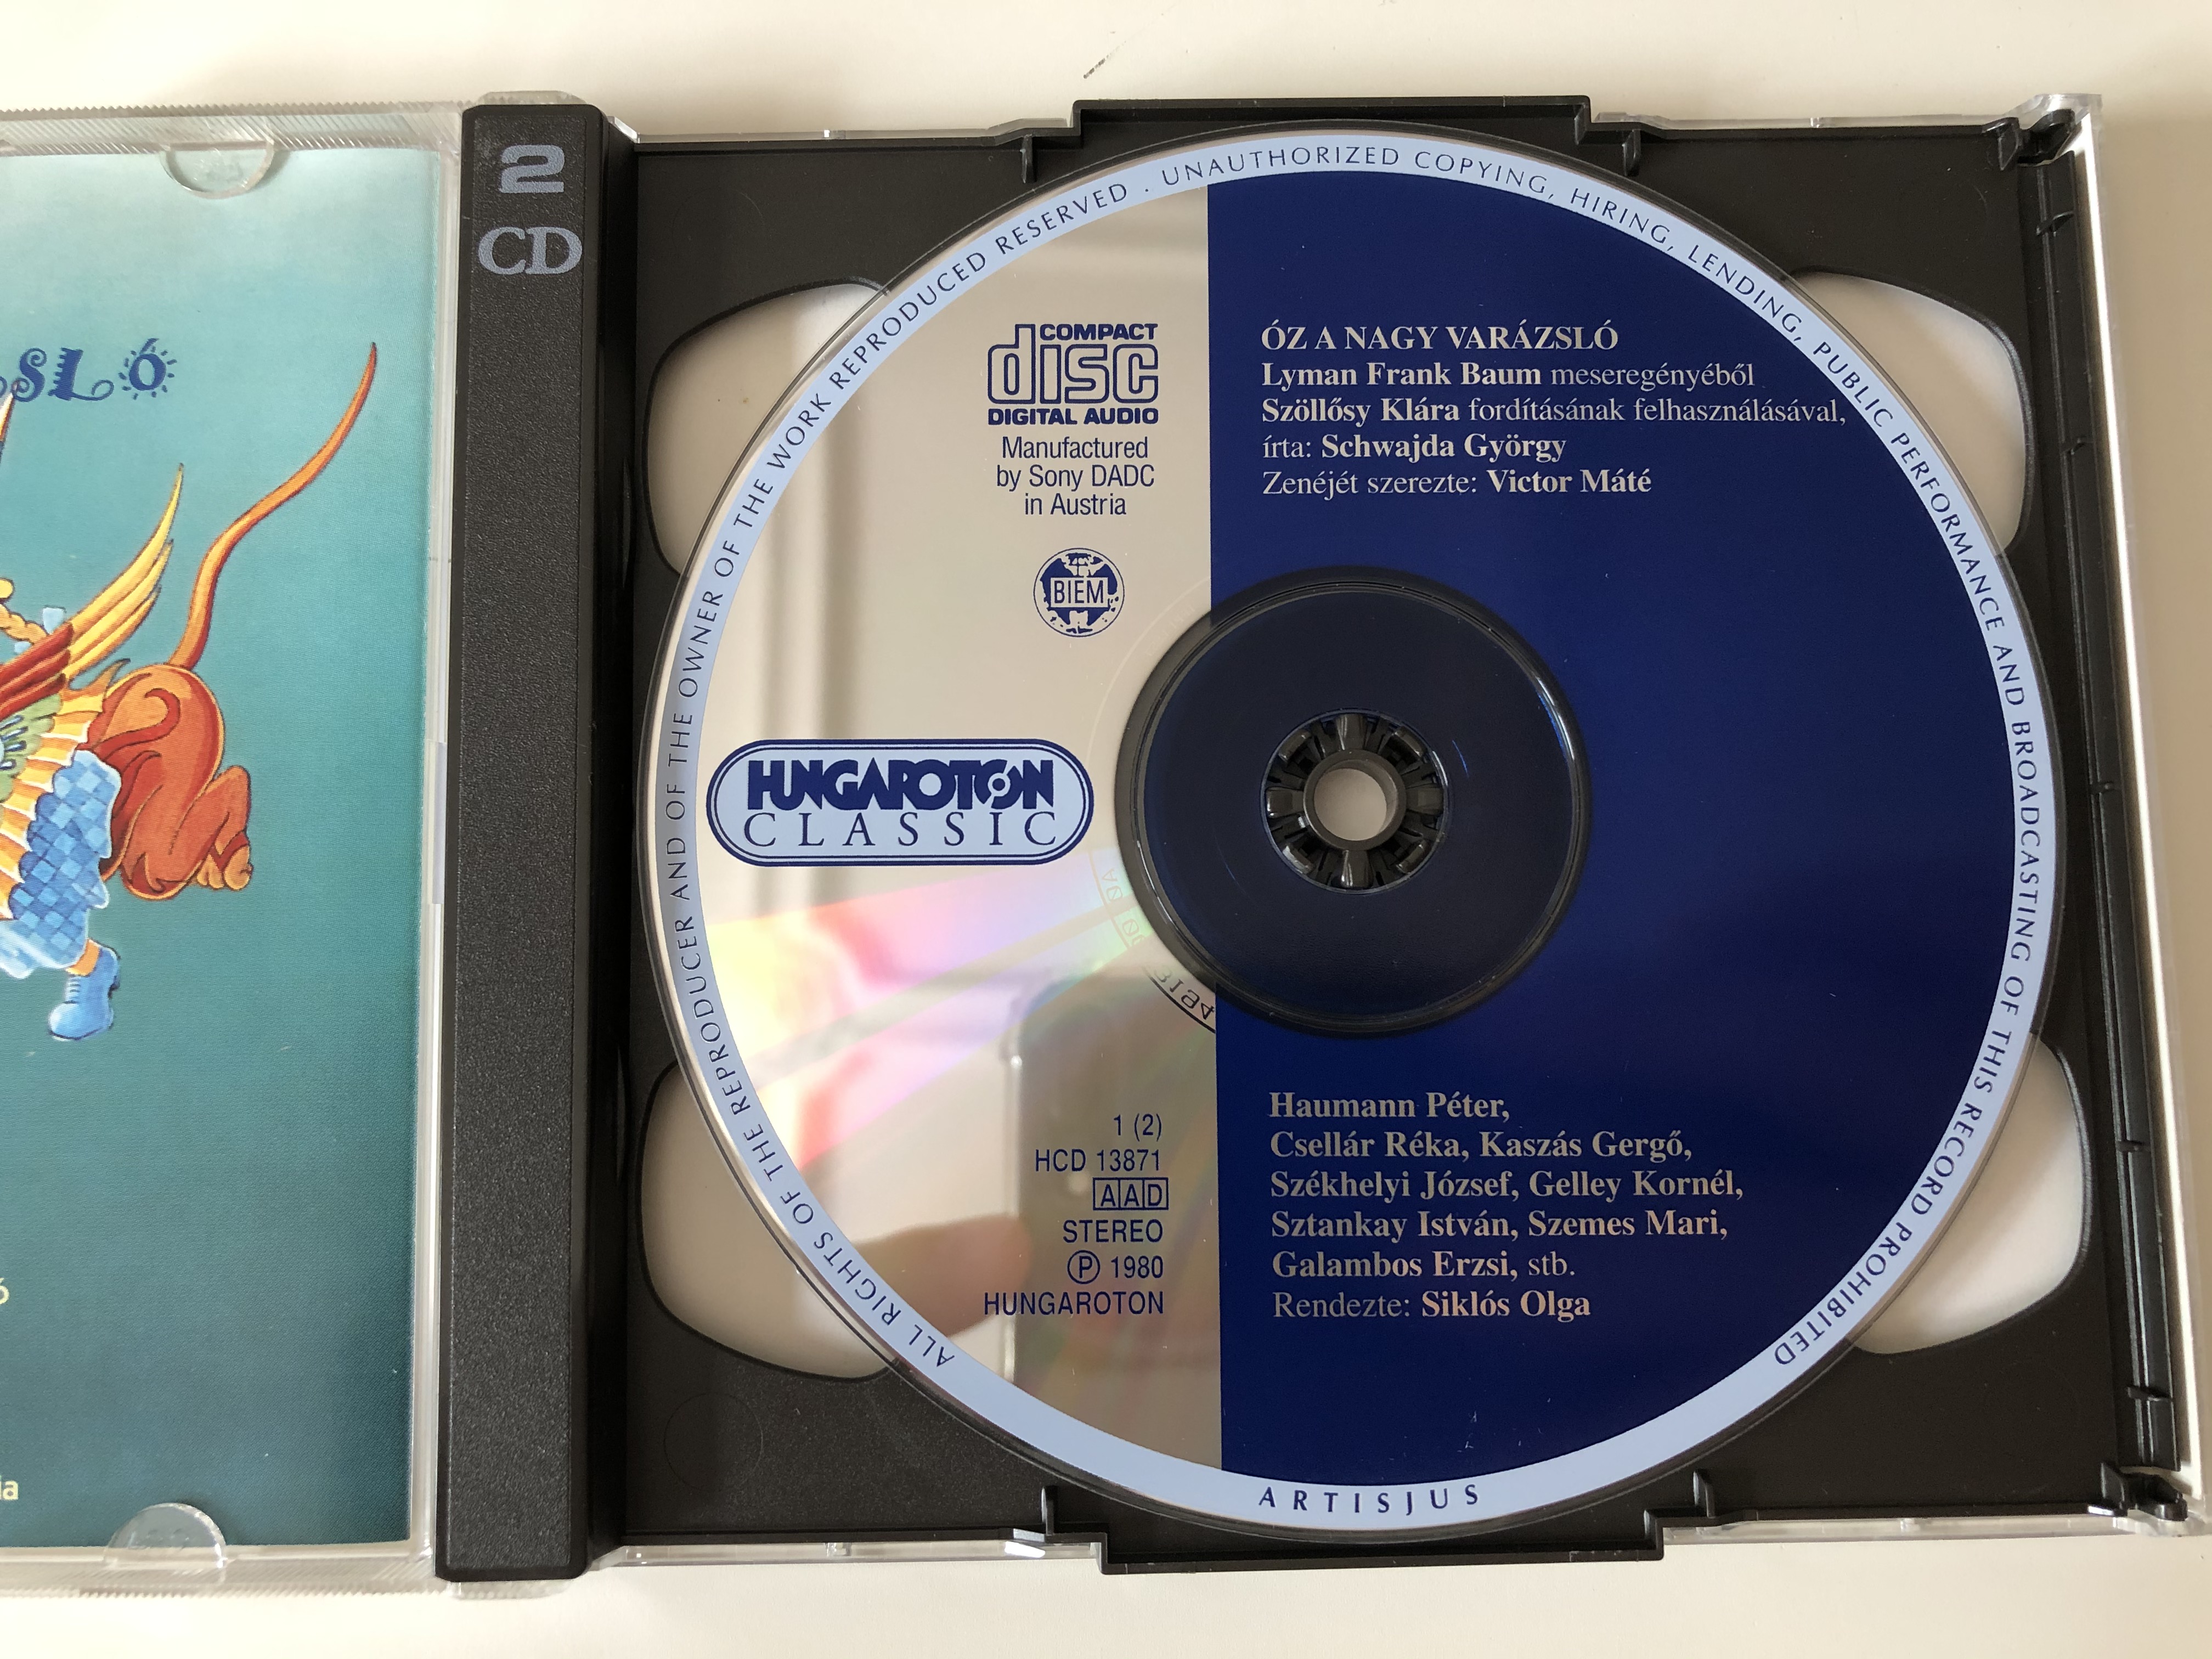 oz-anagy-varazslo-hungaroton-classic-2x-audio-cd-2004-stereo-hcd-13871-72-5-.jpg